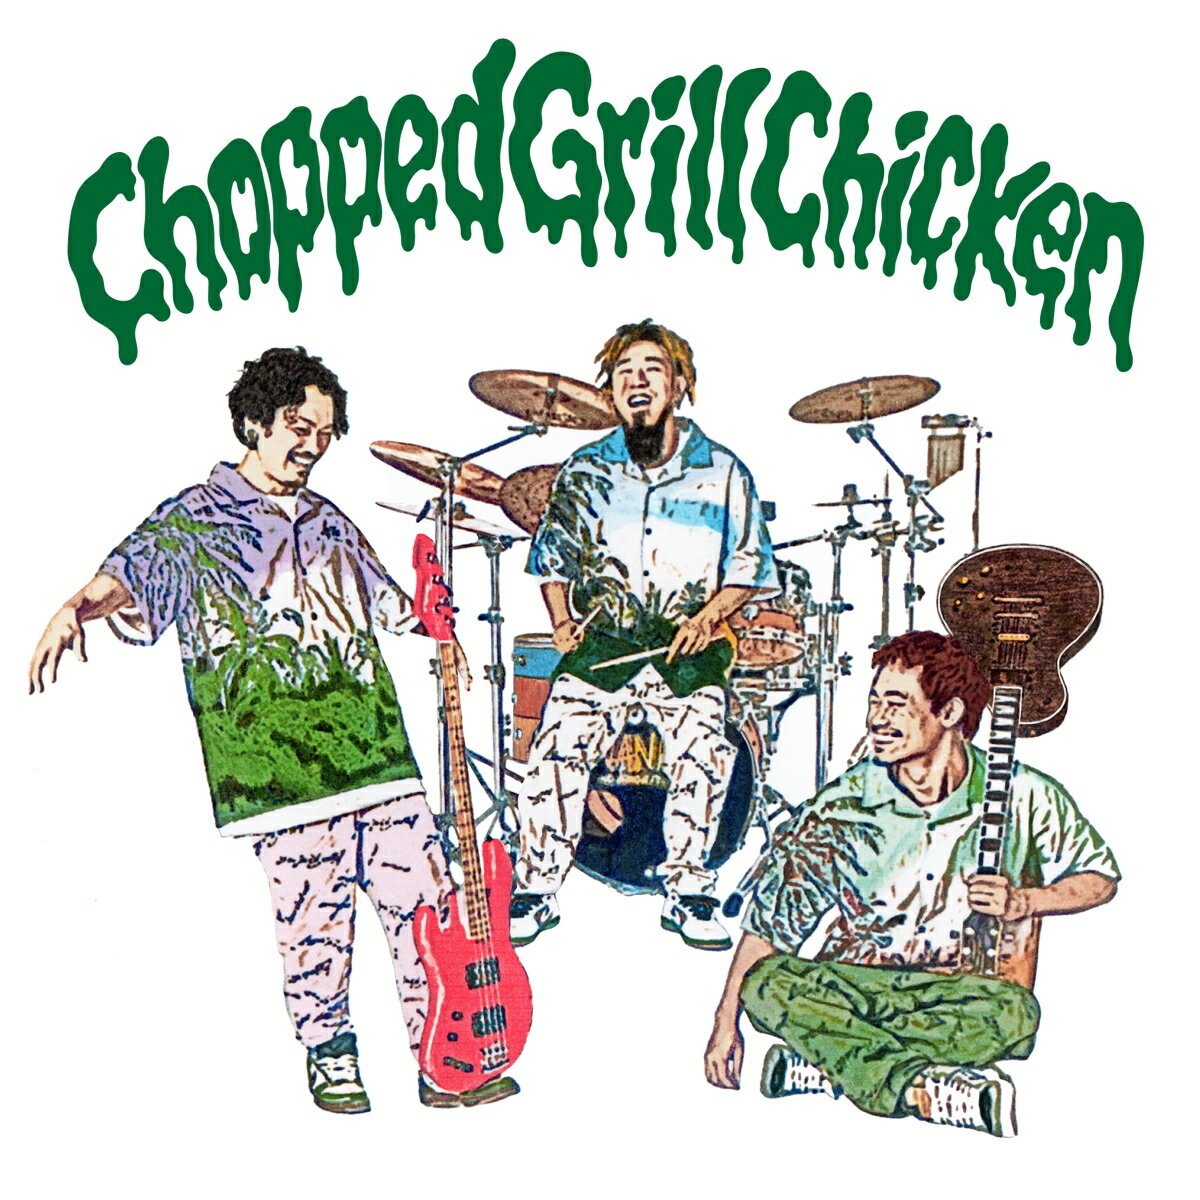 Chopped Grill Chicken (初回限定盤 CD＋DVD) WANIMA